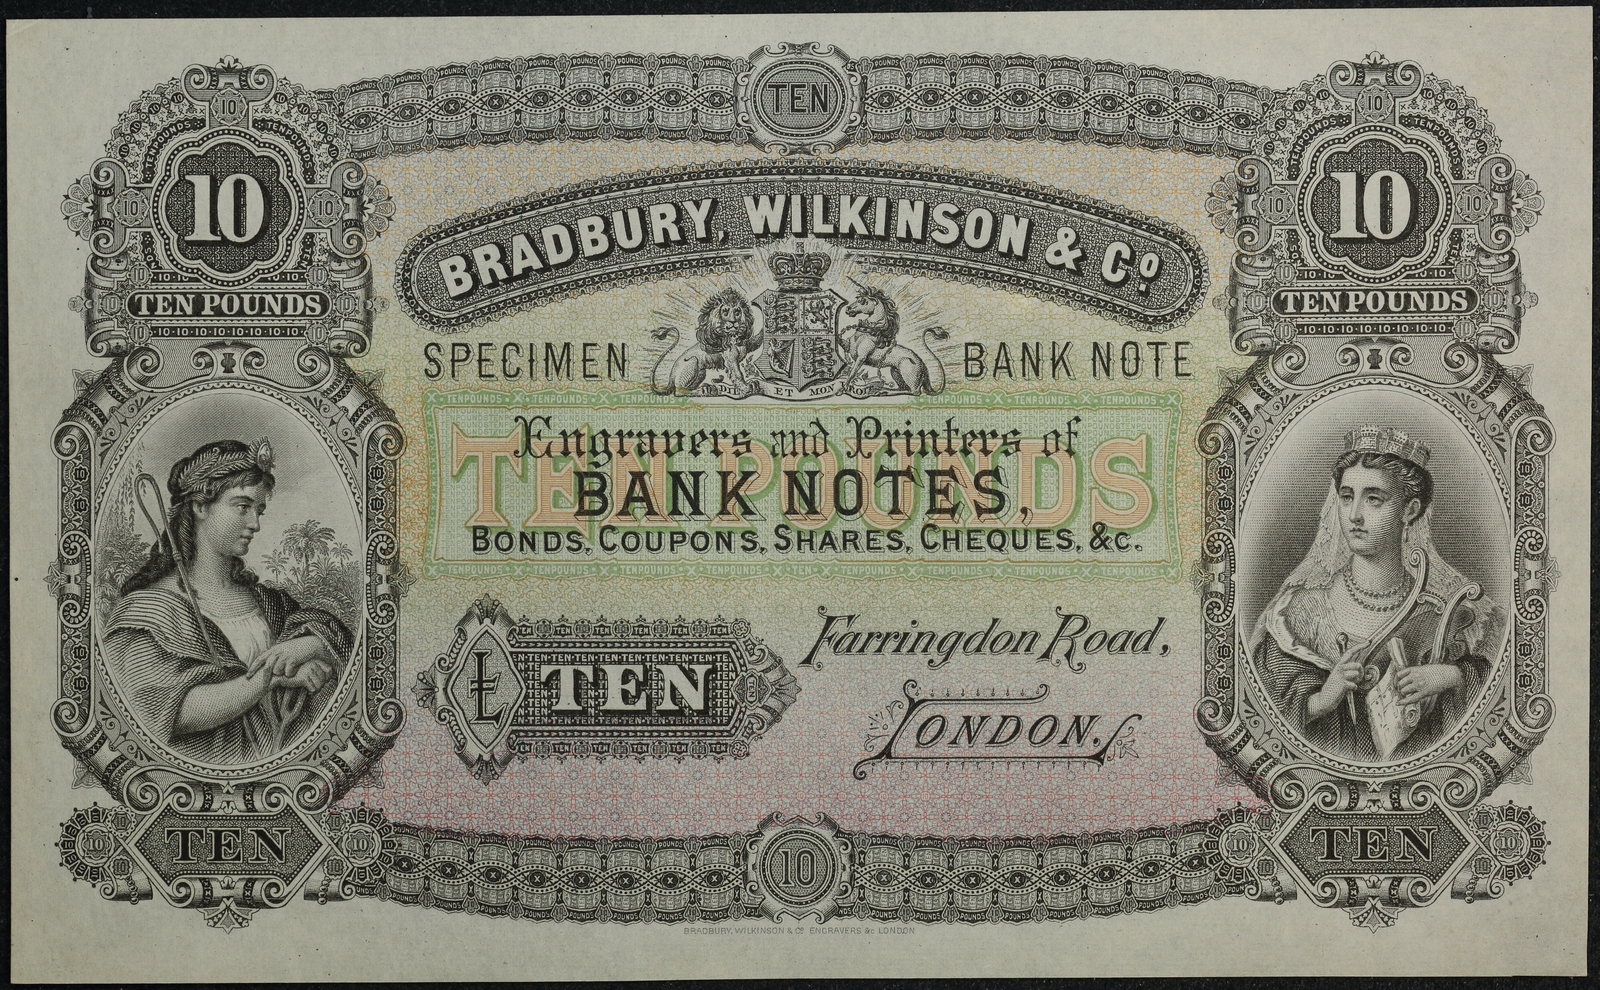 Bradbury Wilkinson & Co Ten Pound Advertising Note Uncirculated product image